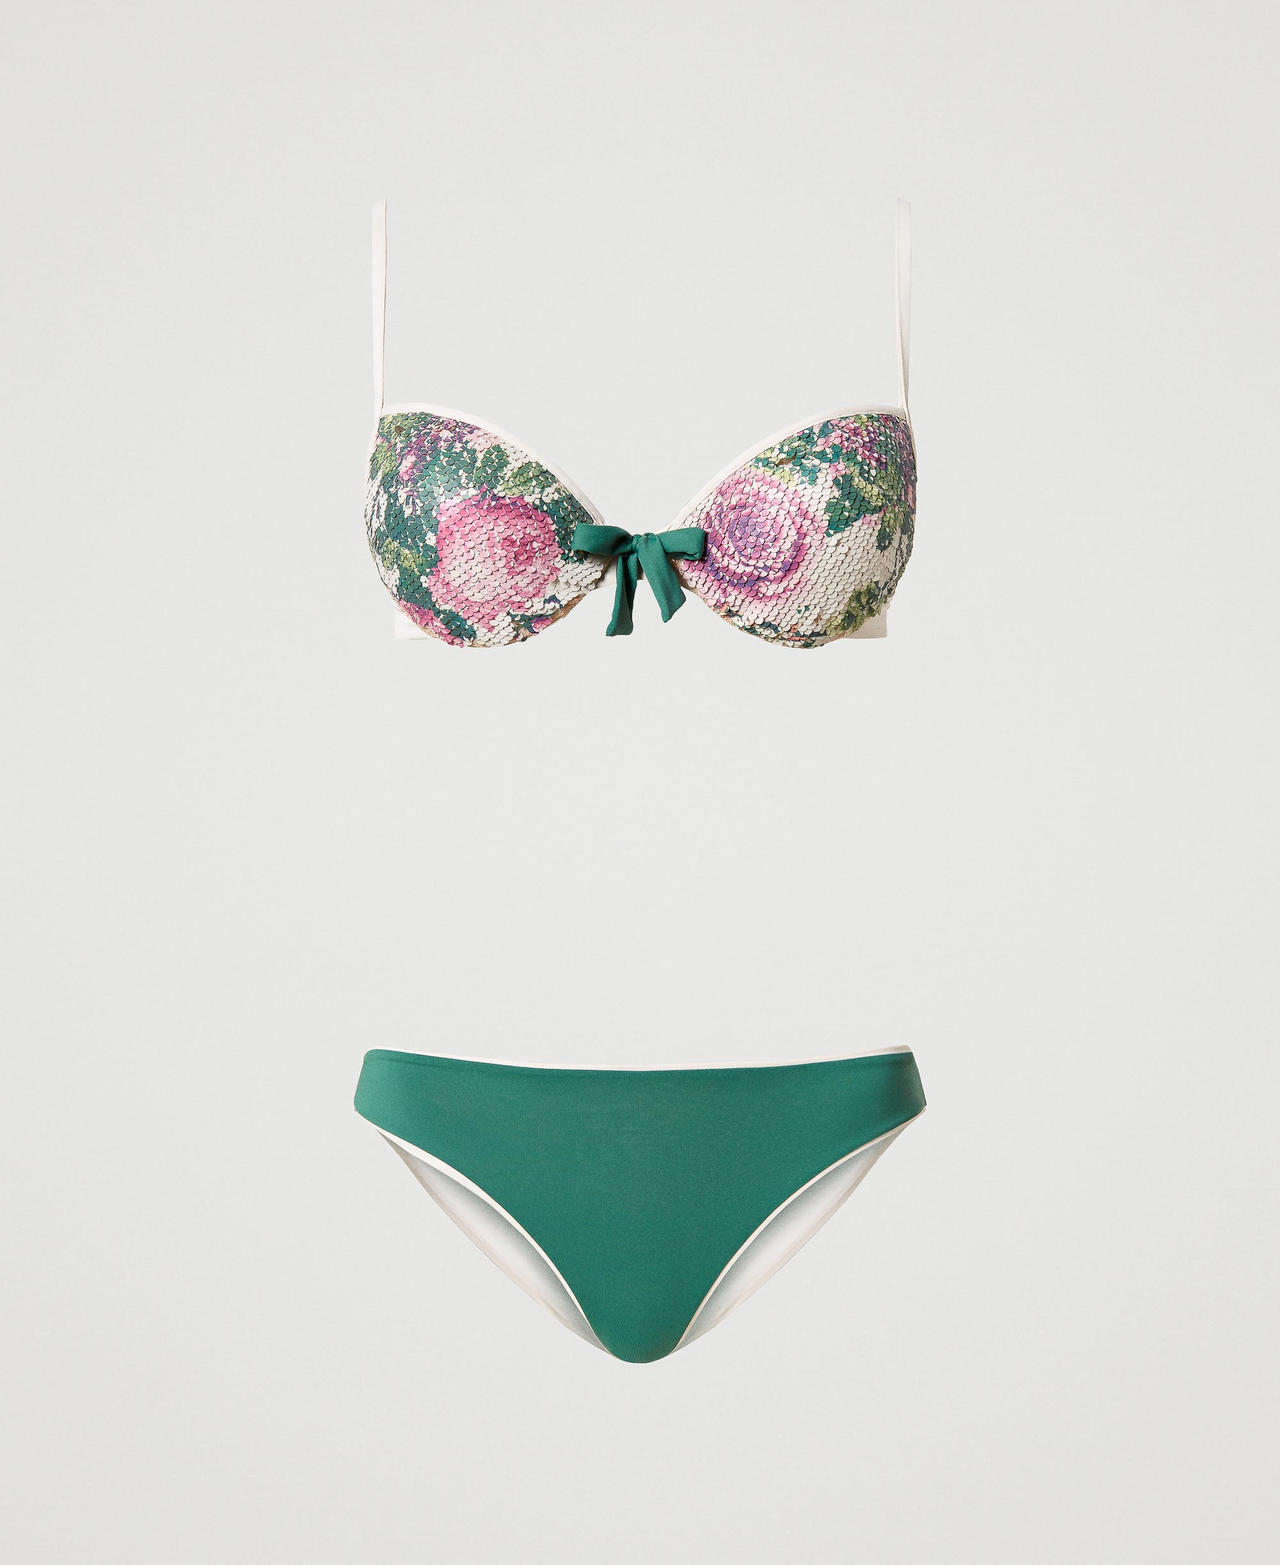 Brigitt N16, patterned push-up bathing bra, green-pink